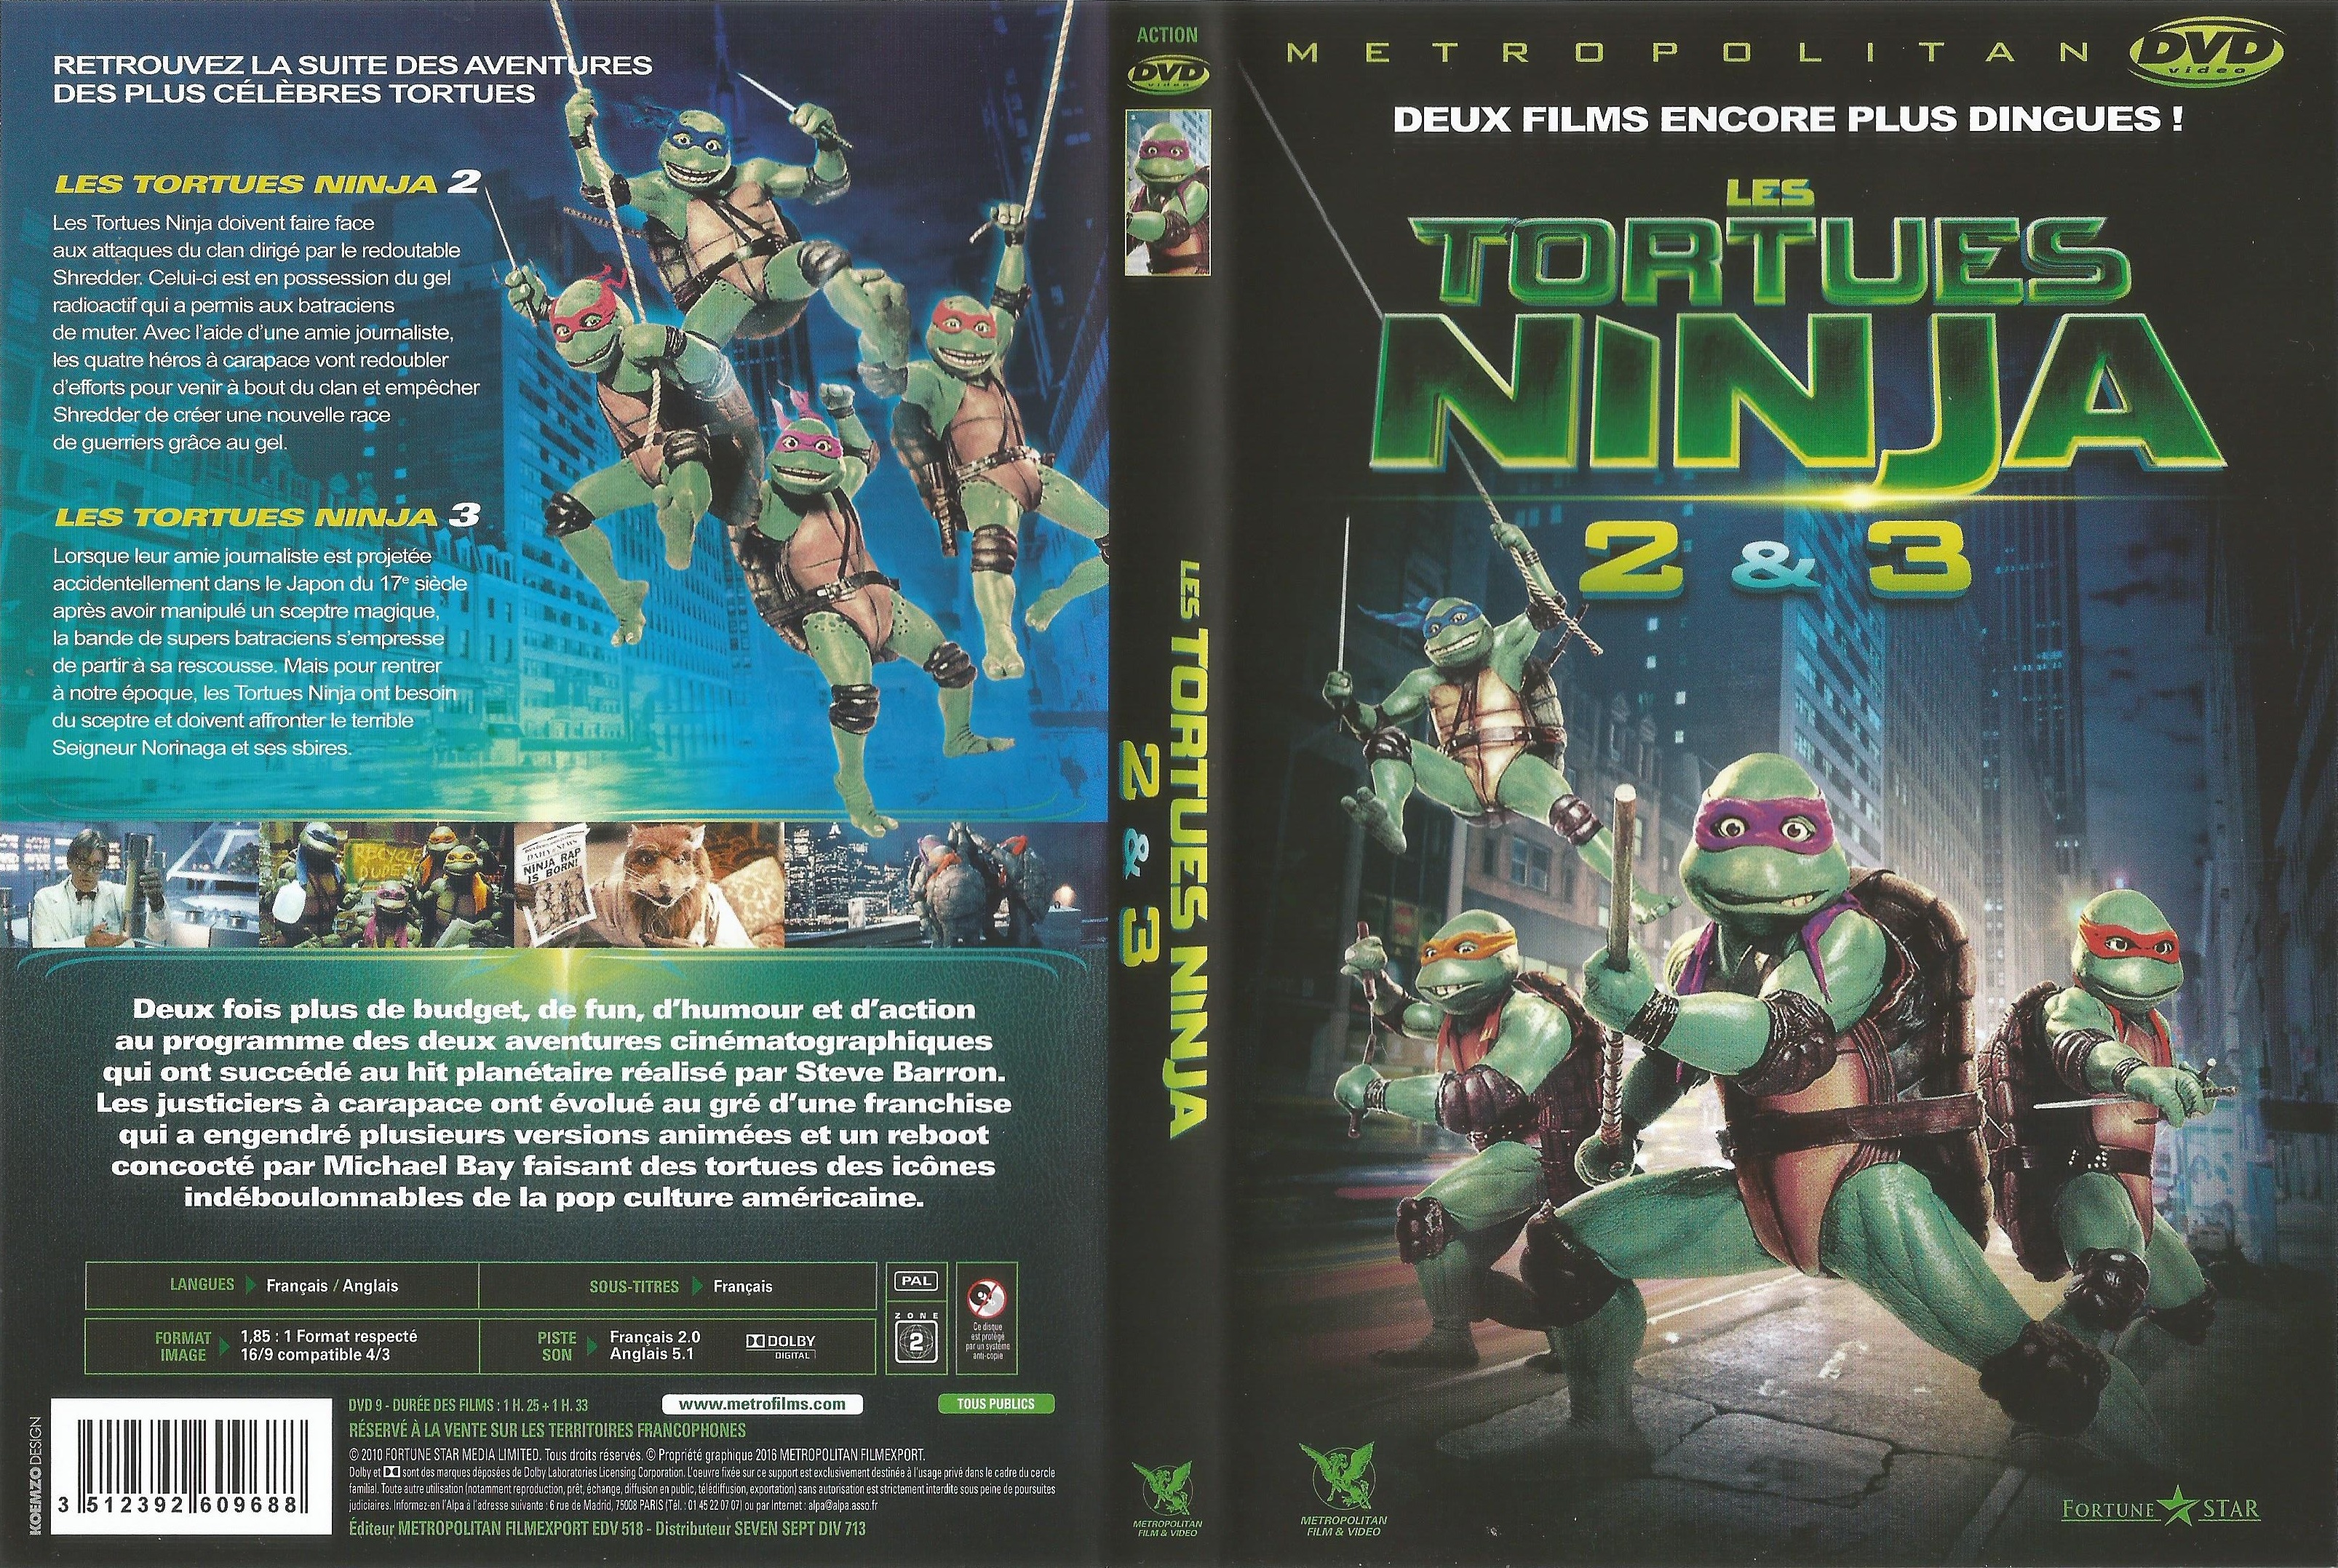 Jaquette DVD Les Tortues Ninja 2 et 3